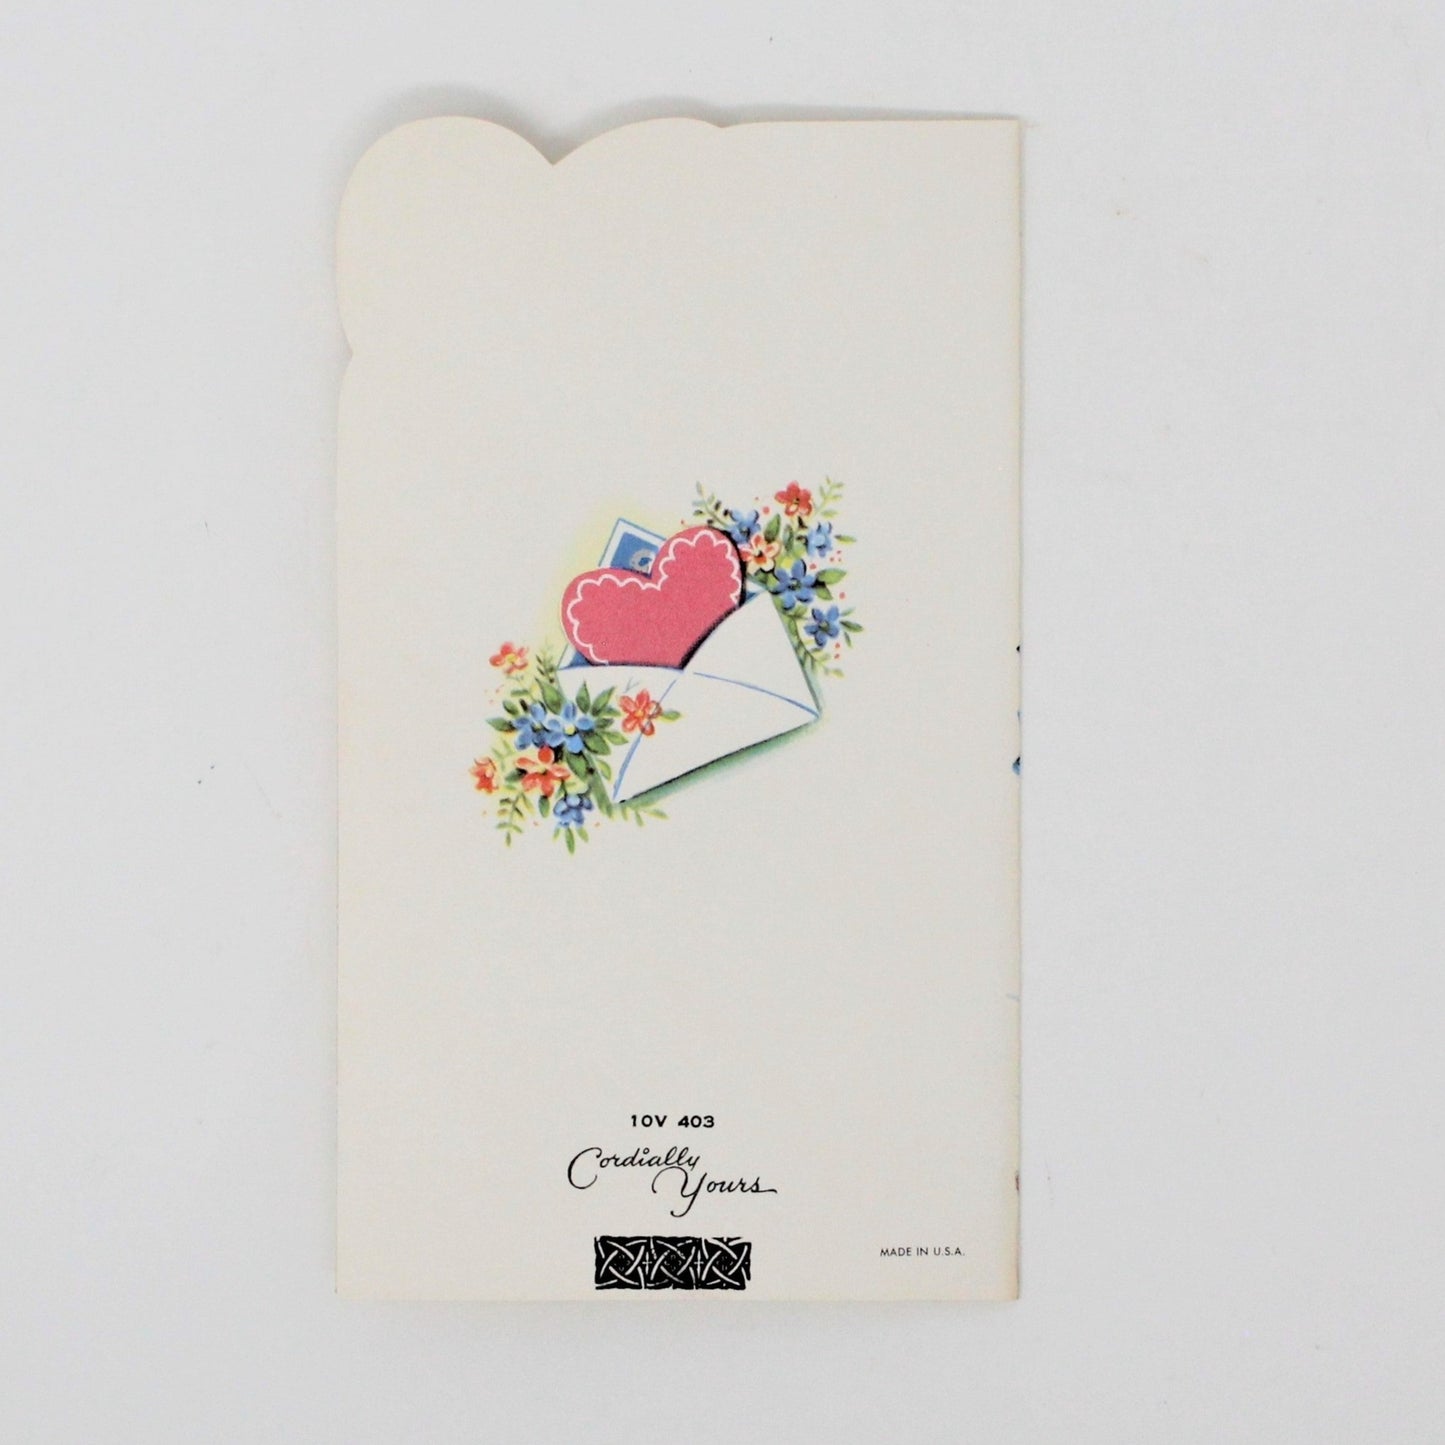 Greeting Card / Valentine's Day Card, Boy & Girl on Scooter / Vespa, Vintage